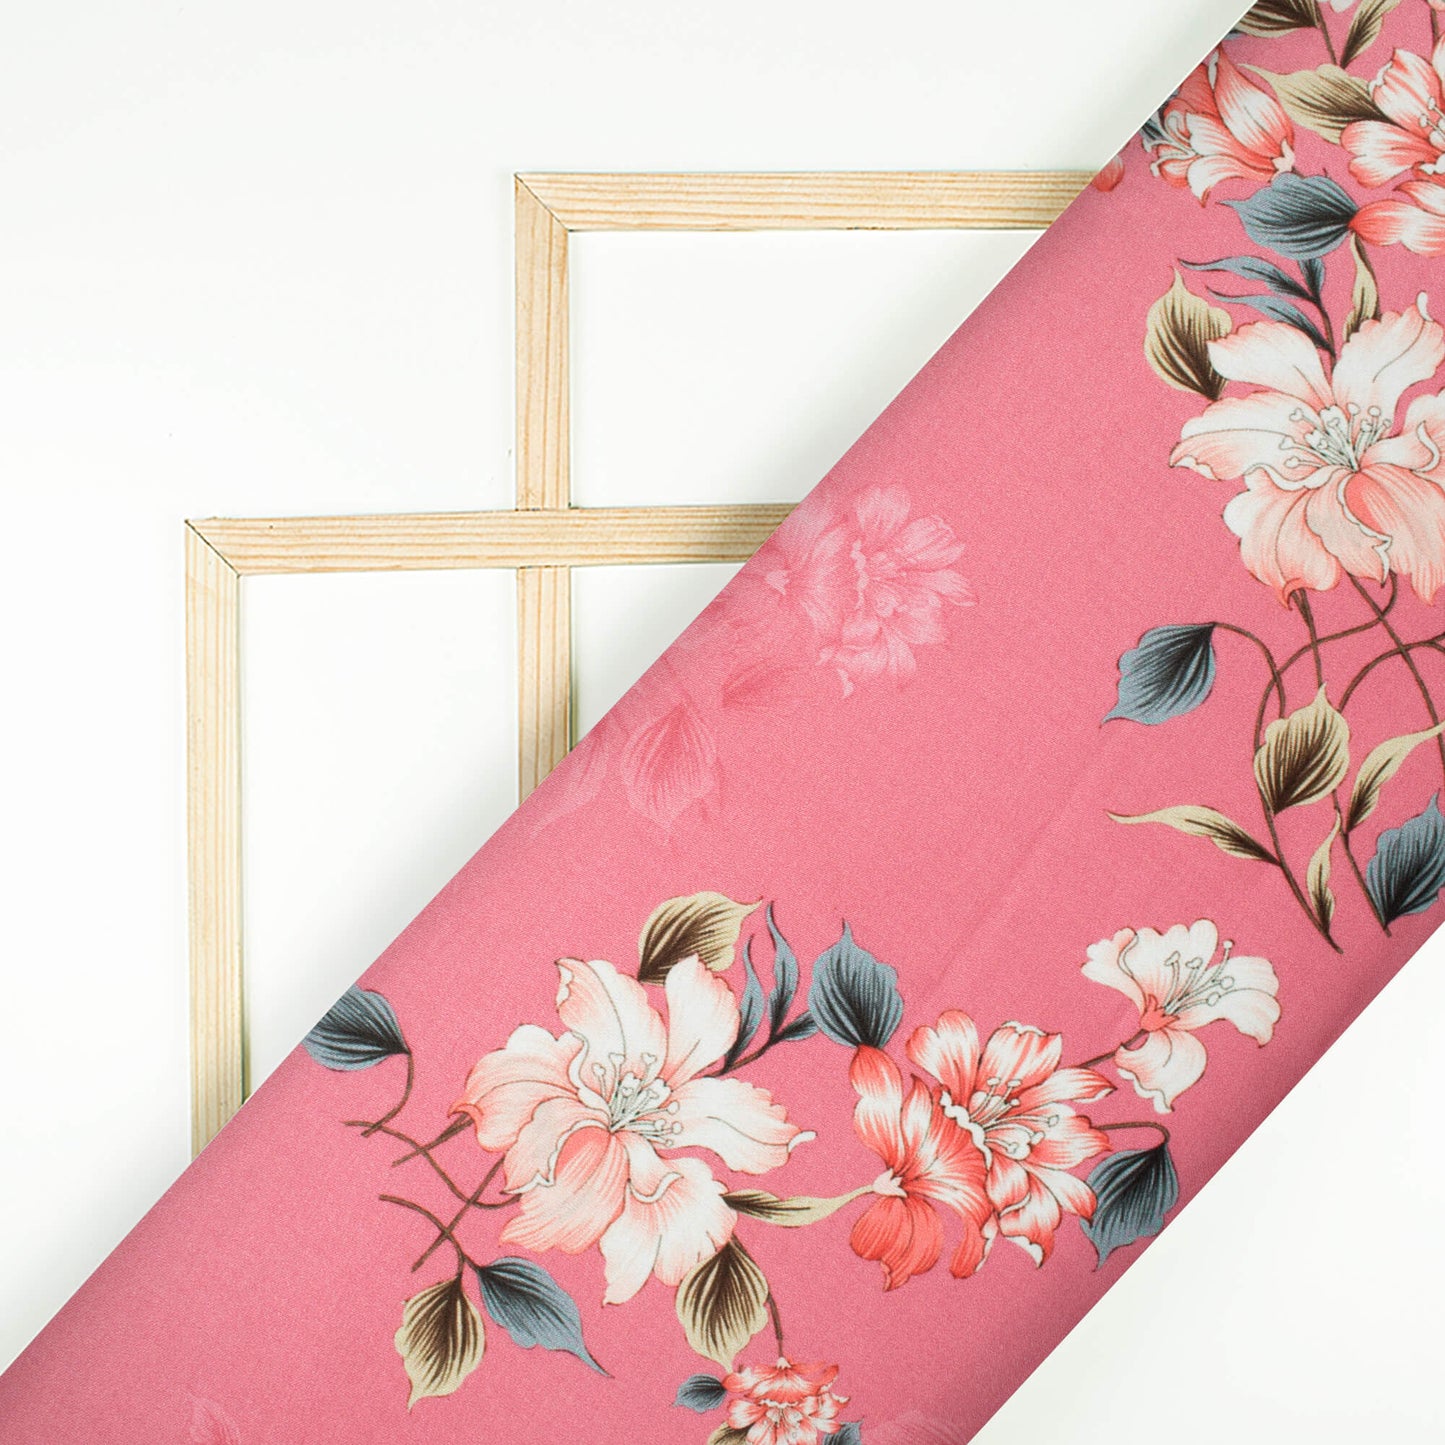 Rouge Pink And White Floral Pattern Digital Print Premium Lush Satin Fabric